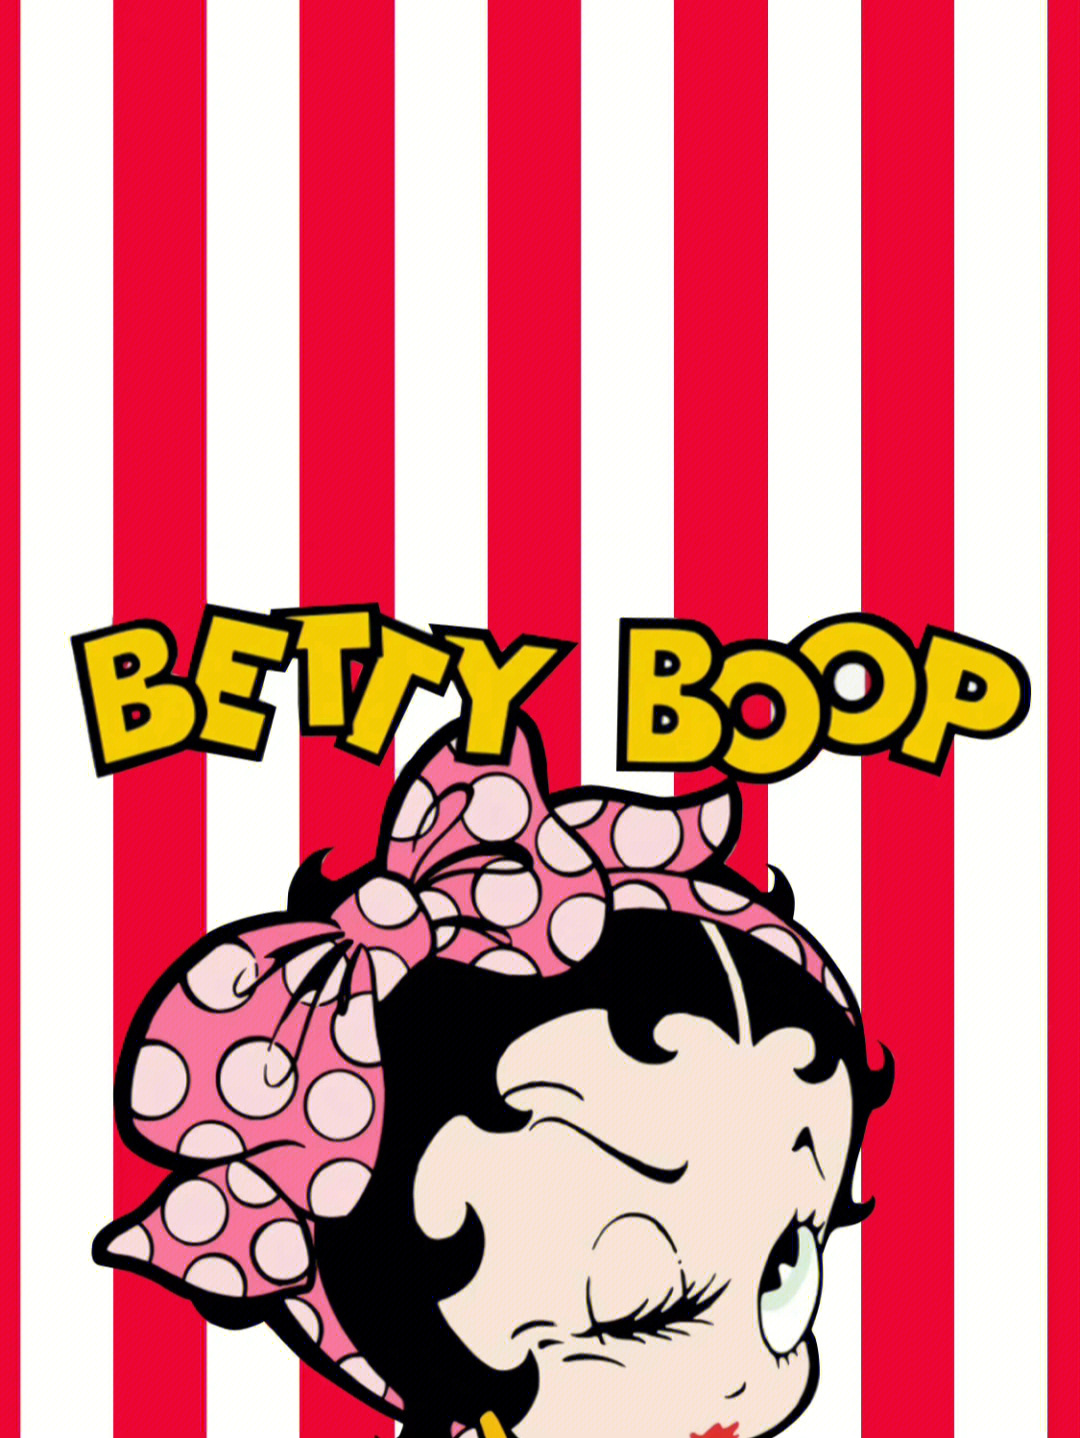 Bettyboop壁纸图片